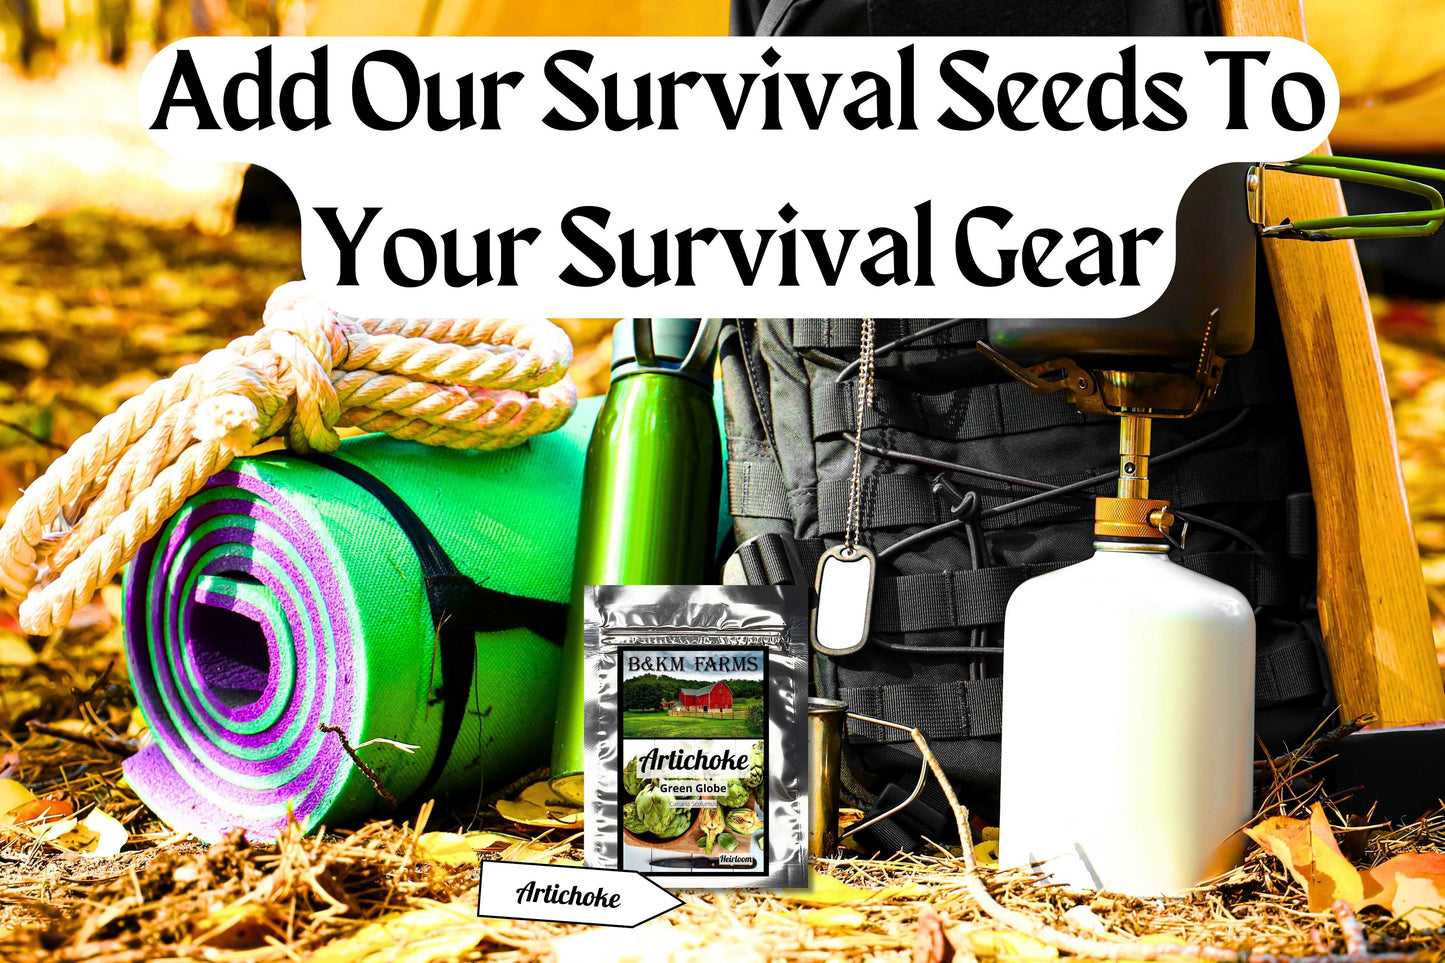 Artichoke Green Globe Seeds: Grow Your Own Globe Artichokes!